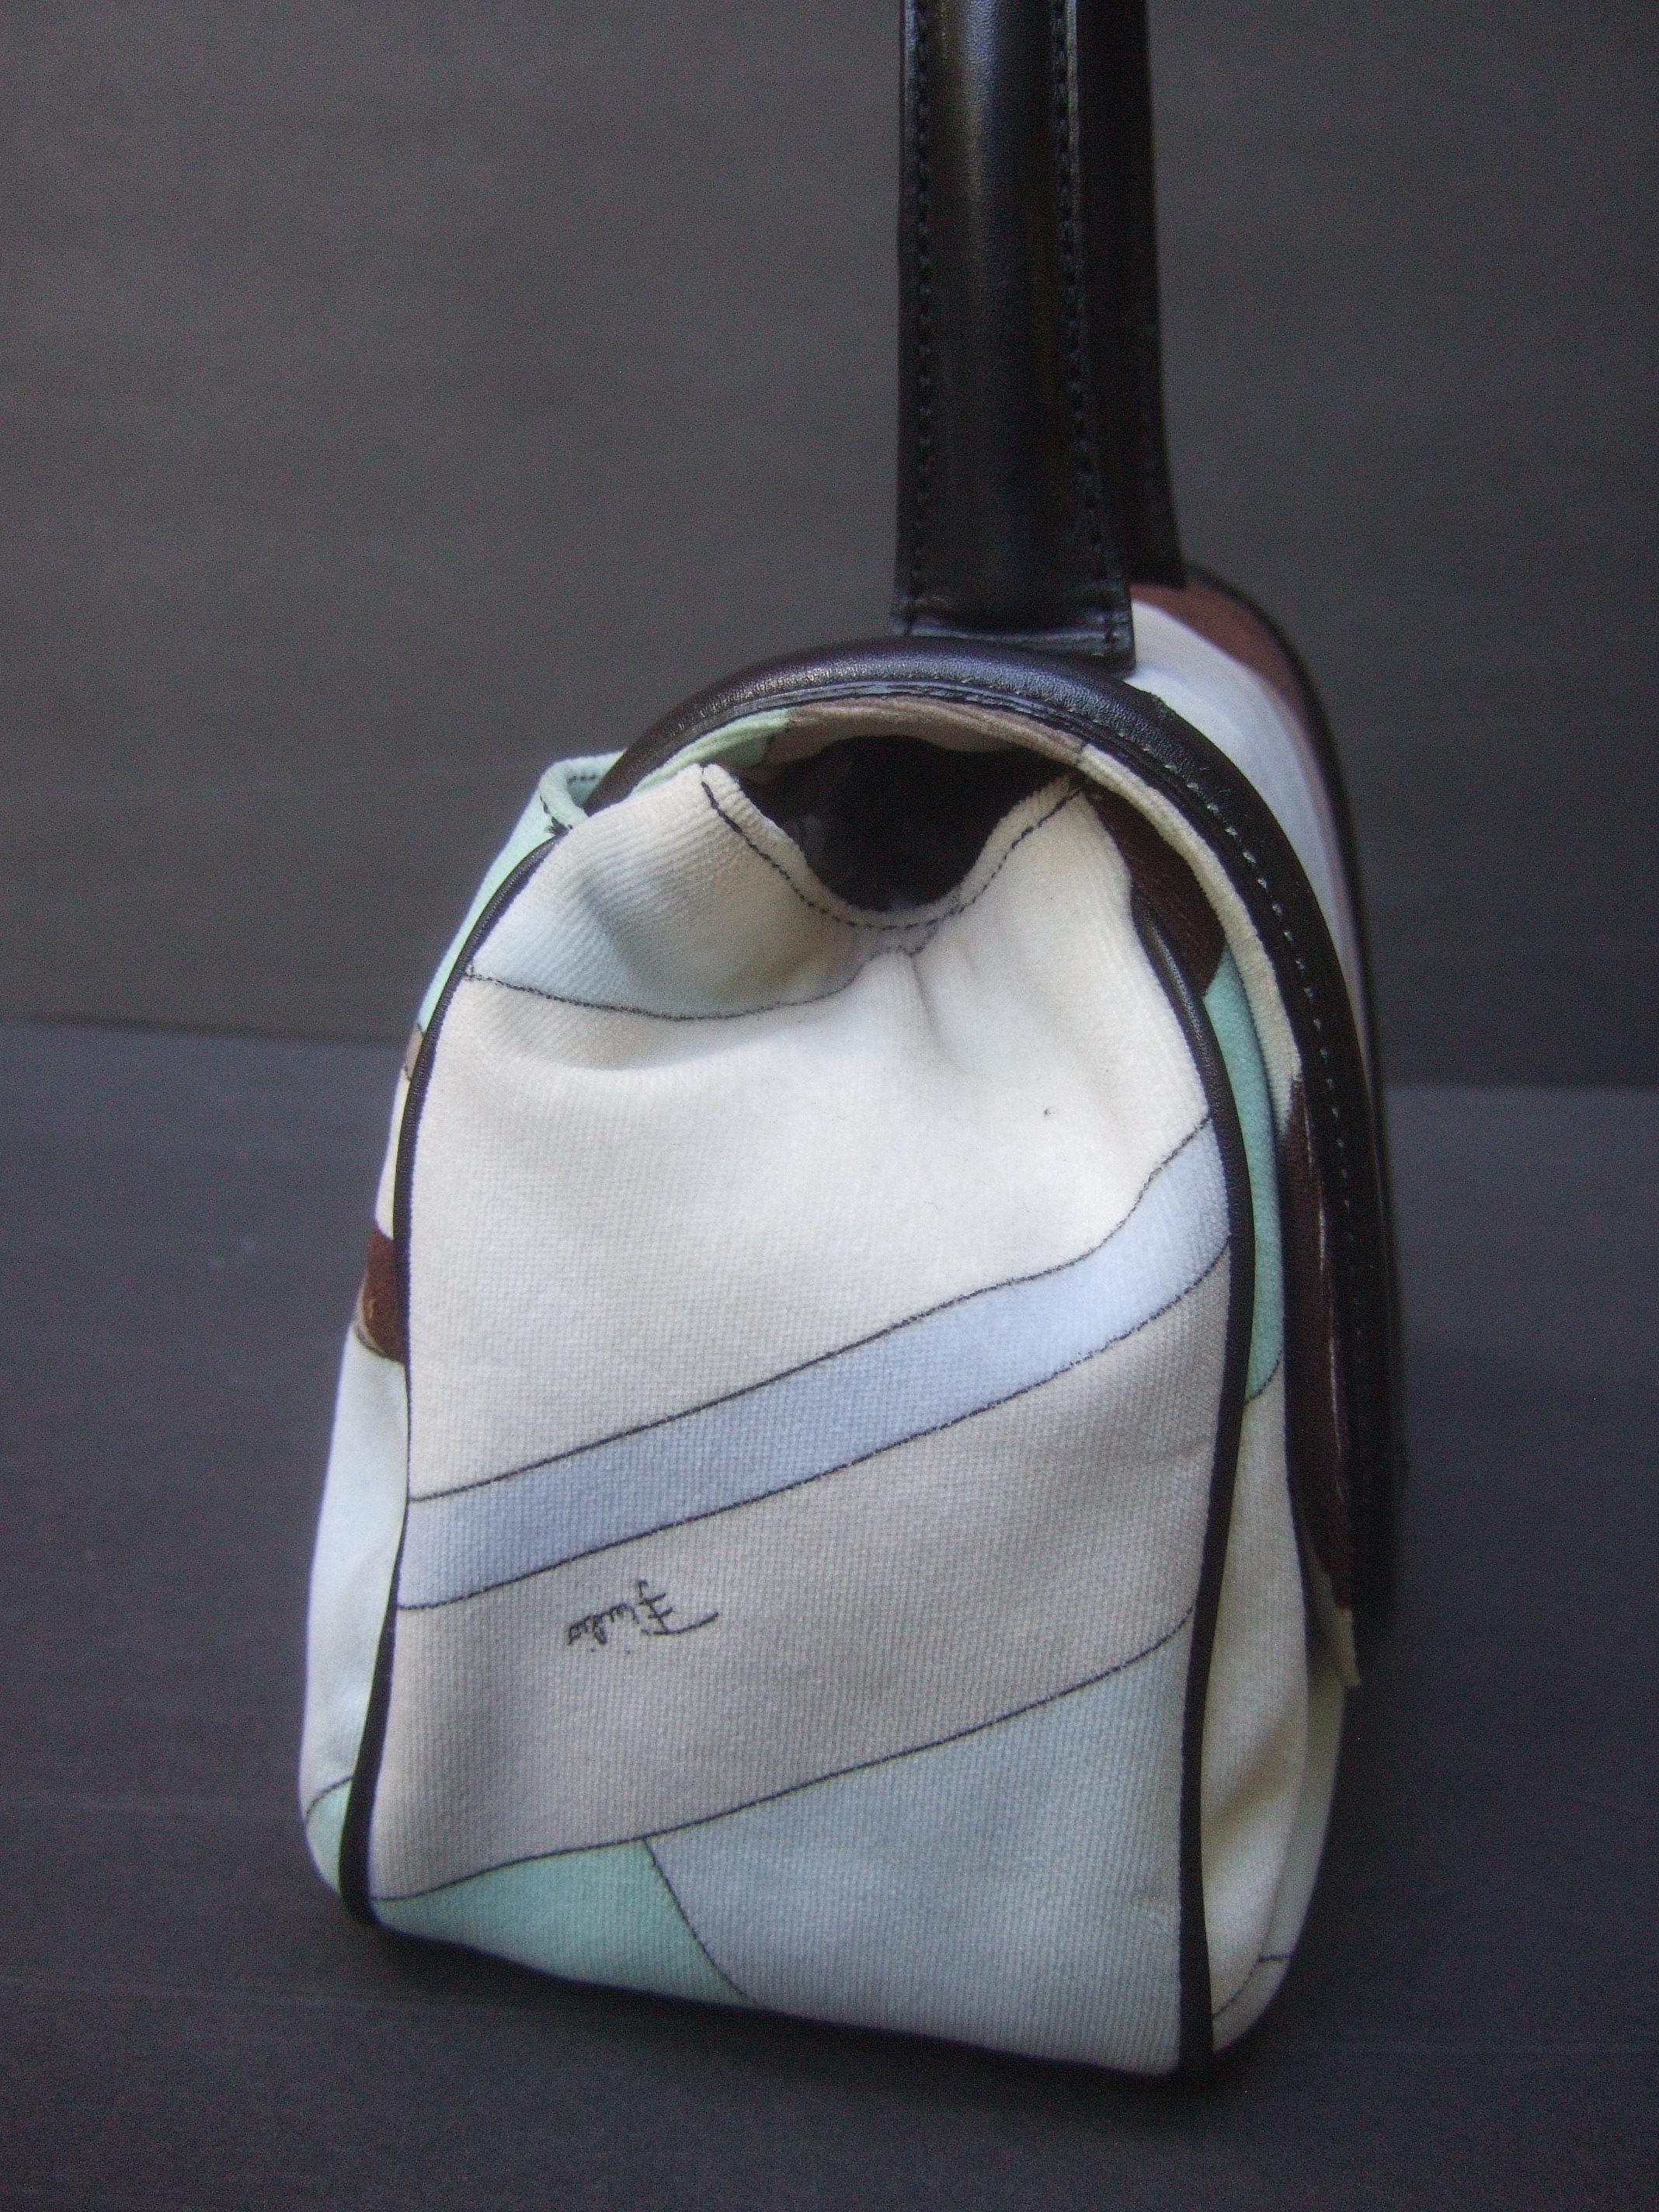 Emilio Pucci Mod Velvet Print Leather Trim Italian Handbag circa 21st c  For Sale 9